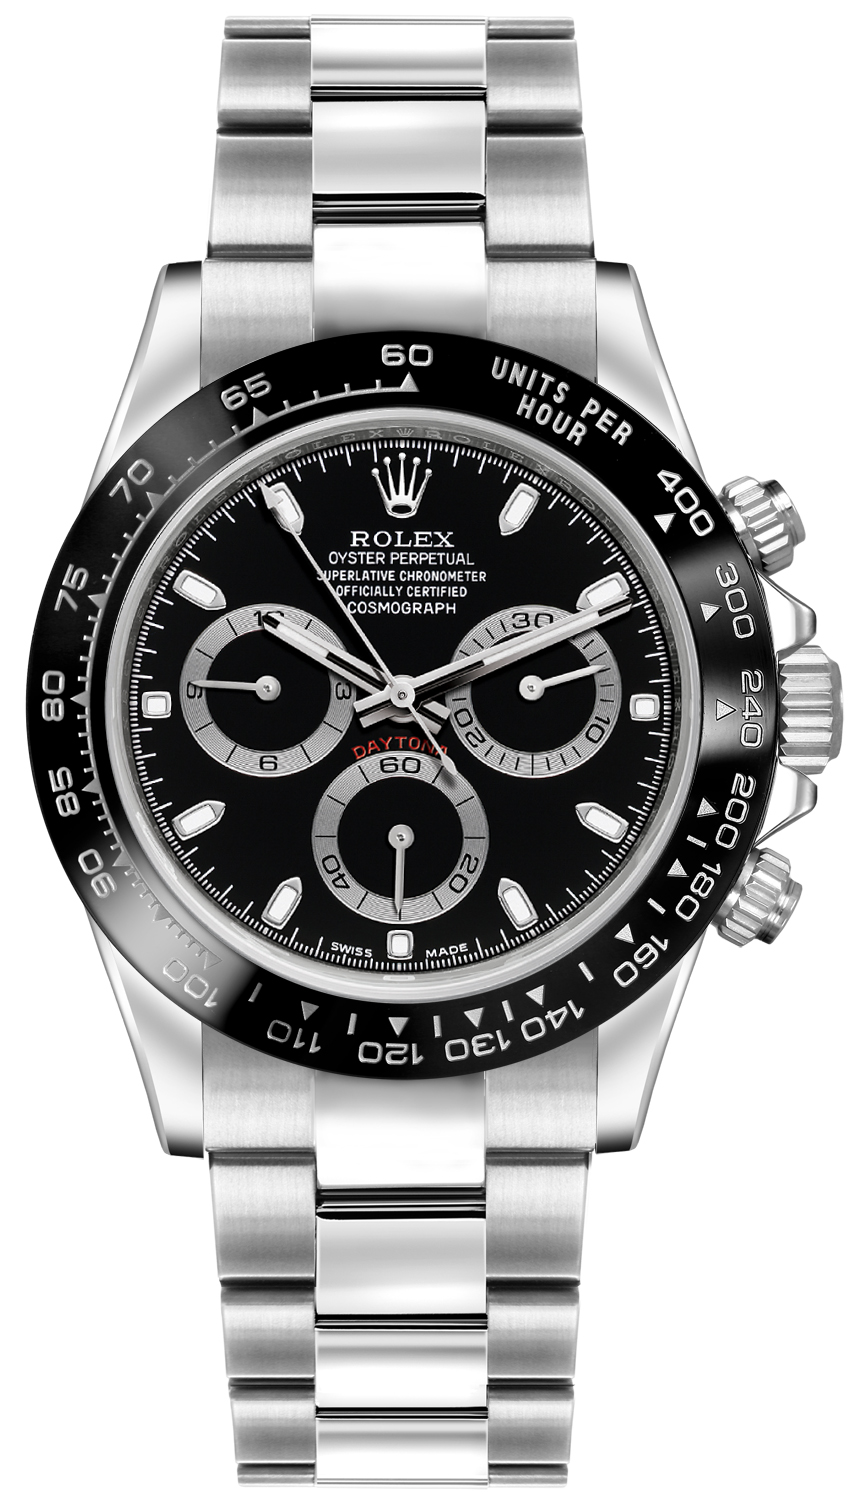 rolex cosmograph daytona men's black dial watch 116500ln